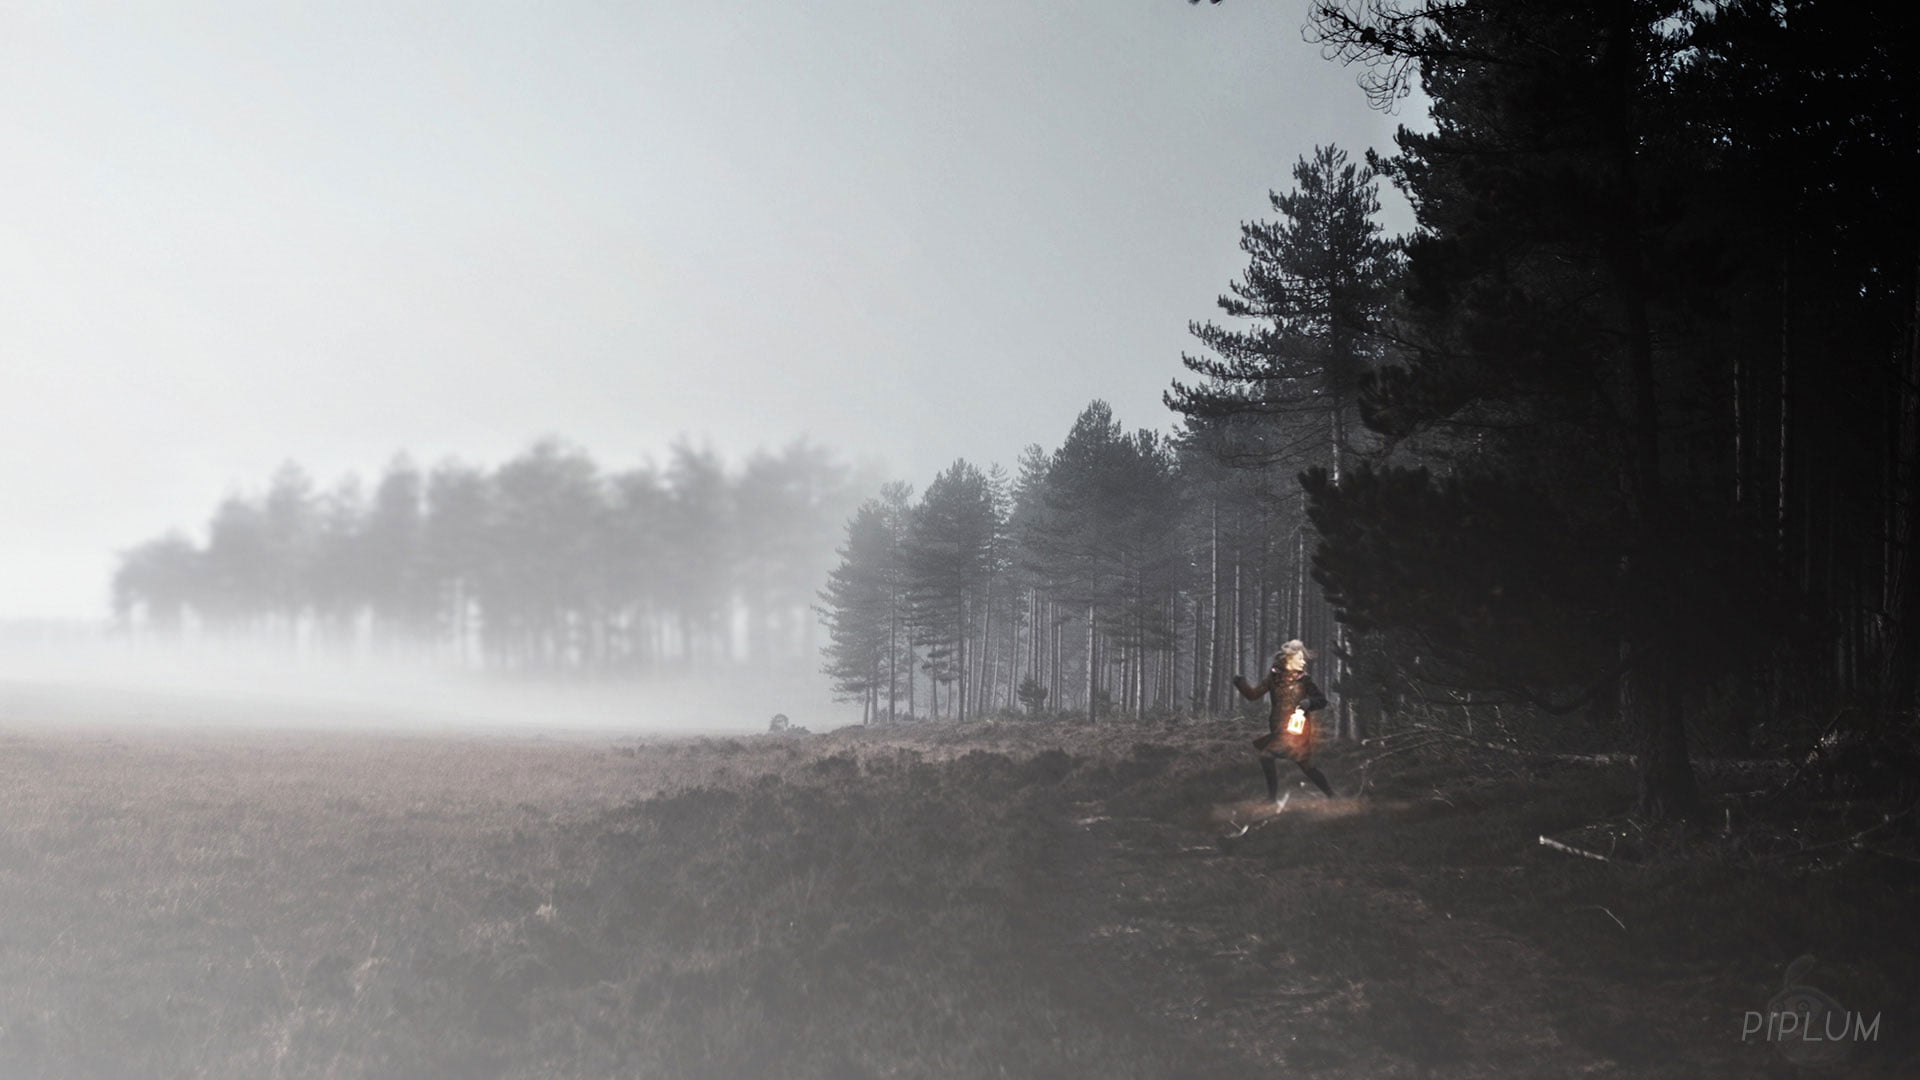 monsters-in-palanga-photo-manipulation-surreal-world-forest-mist-fog-run-lantern